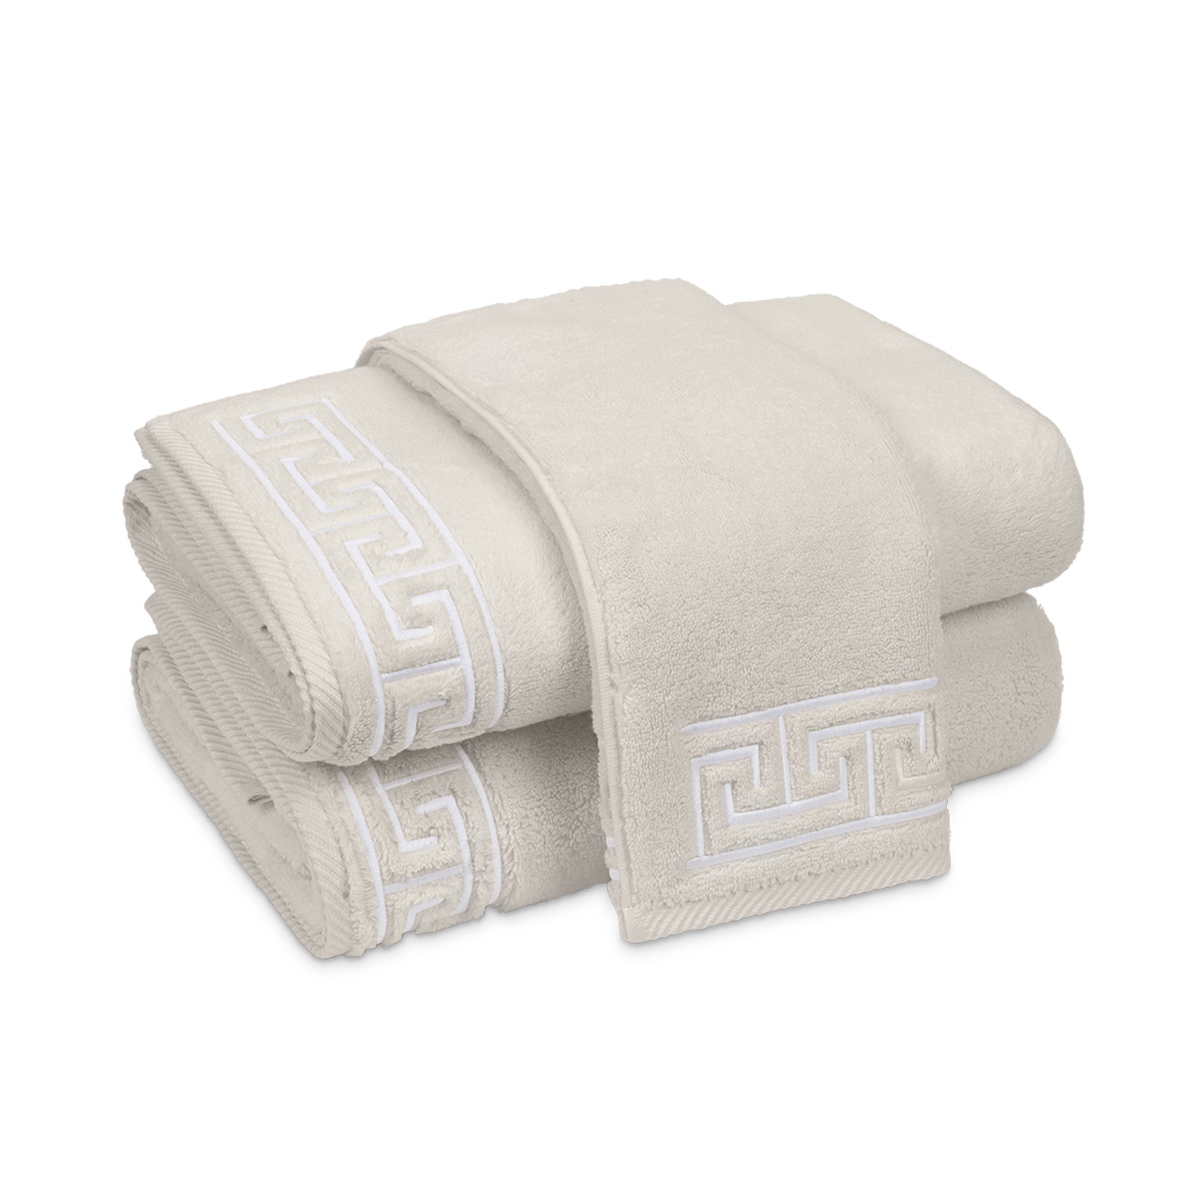 Folded Bath Towels of Matouk Adelphi Bath Towels in Color Ivory